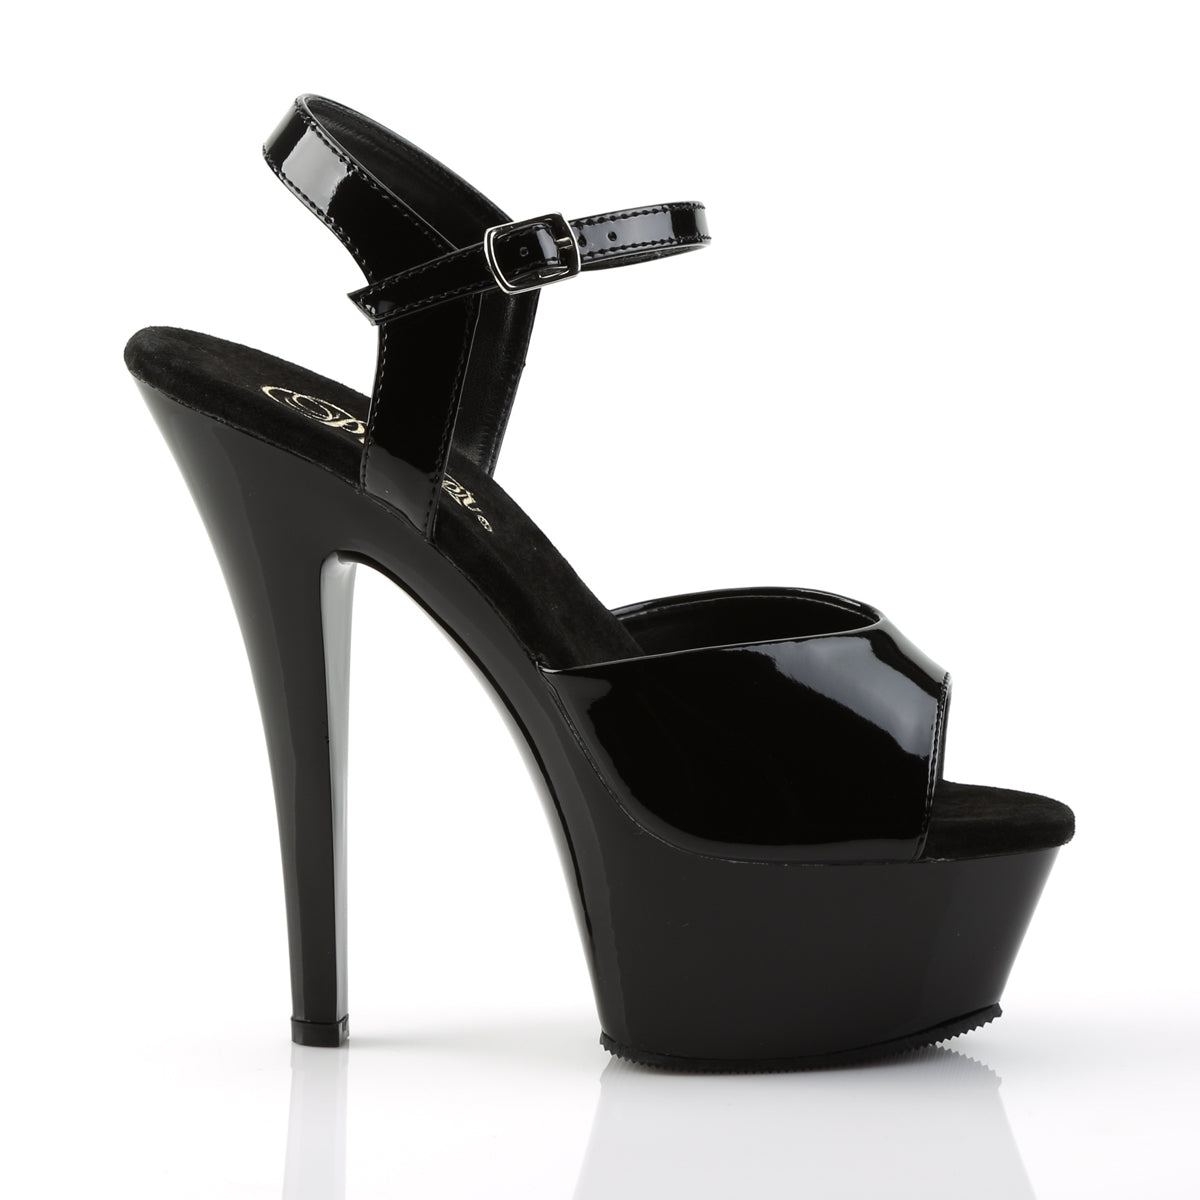 KISS-209 Black Patent Platform Sandal Pleaser